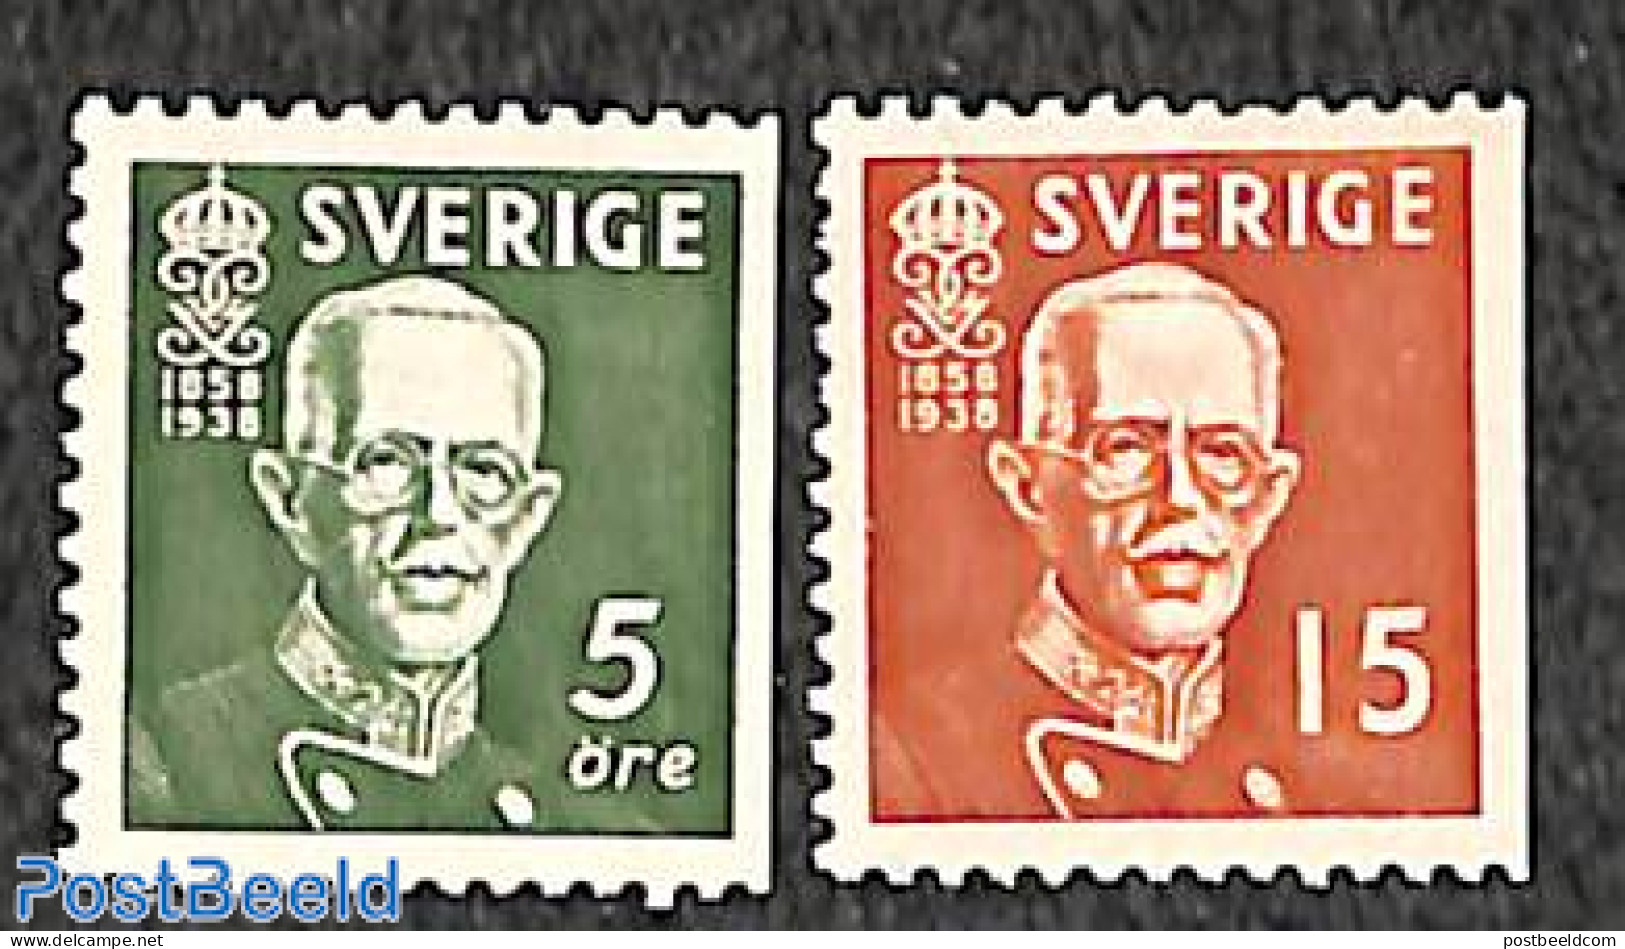 Sweden 1938 King Gustav V 2v, Perforated On 3 Sides, Mint NH - Neufs